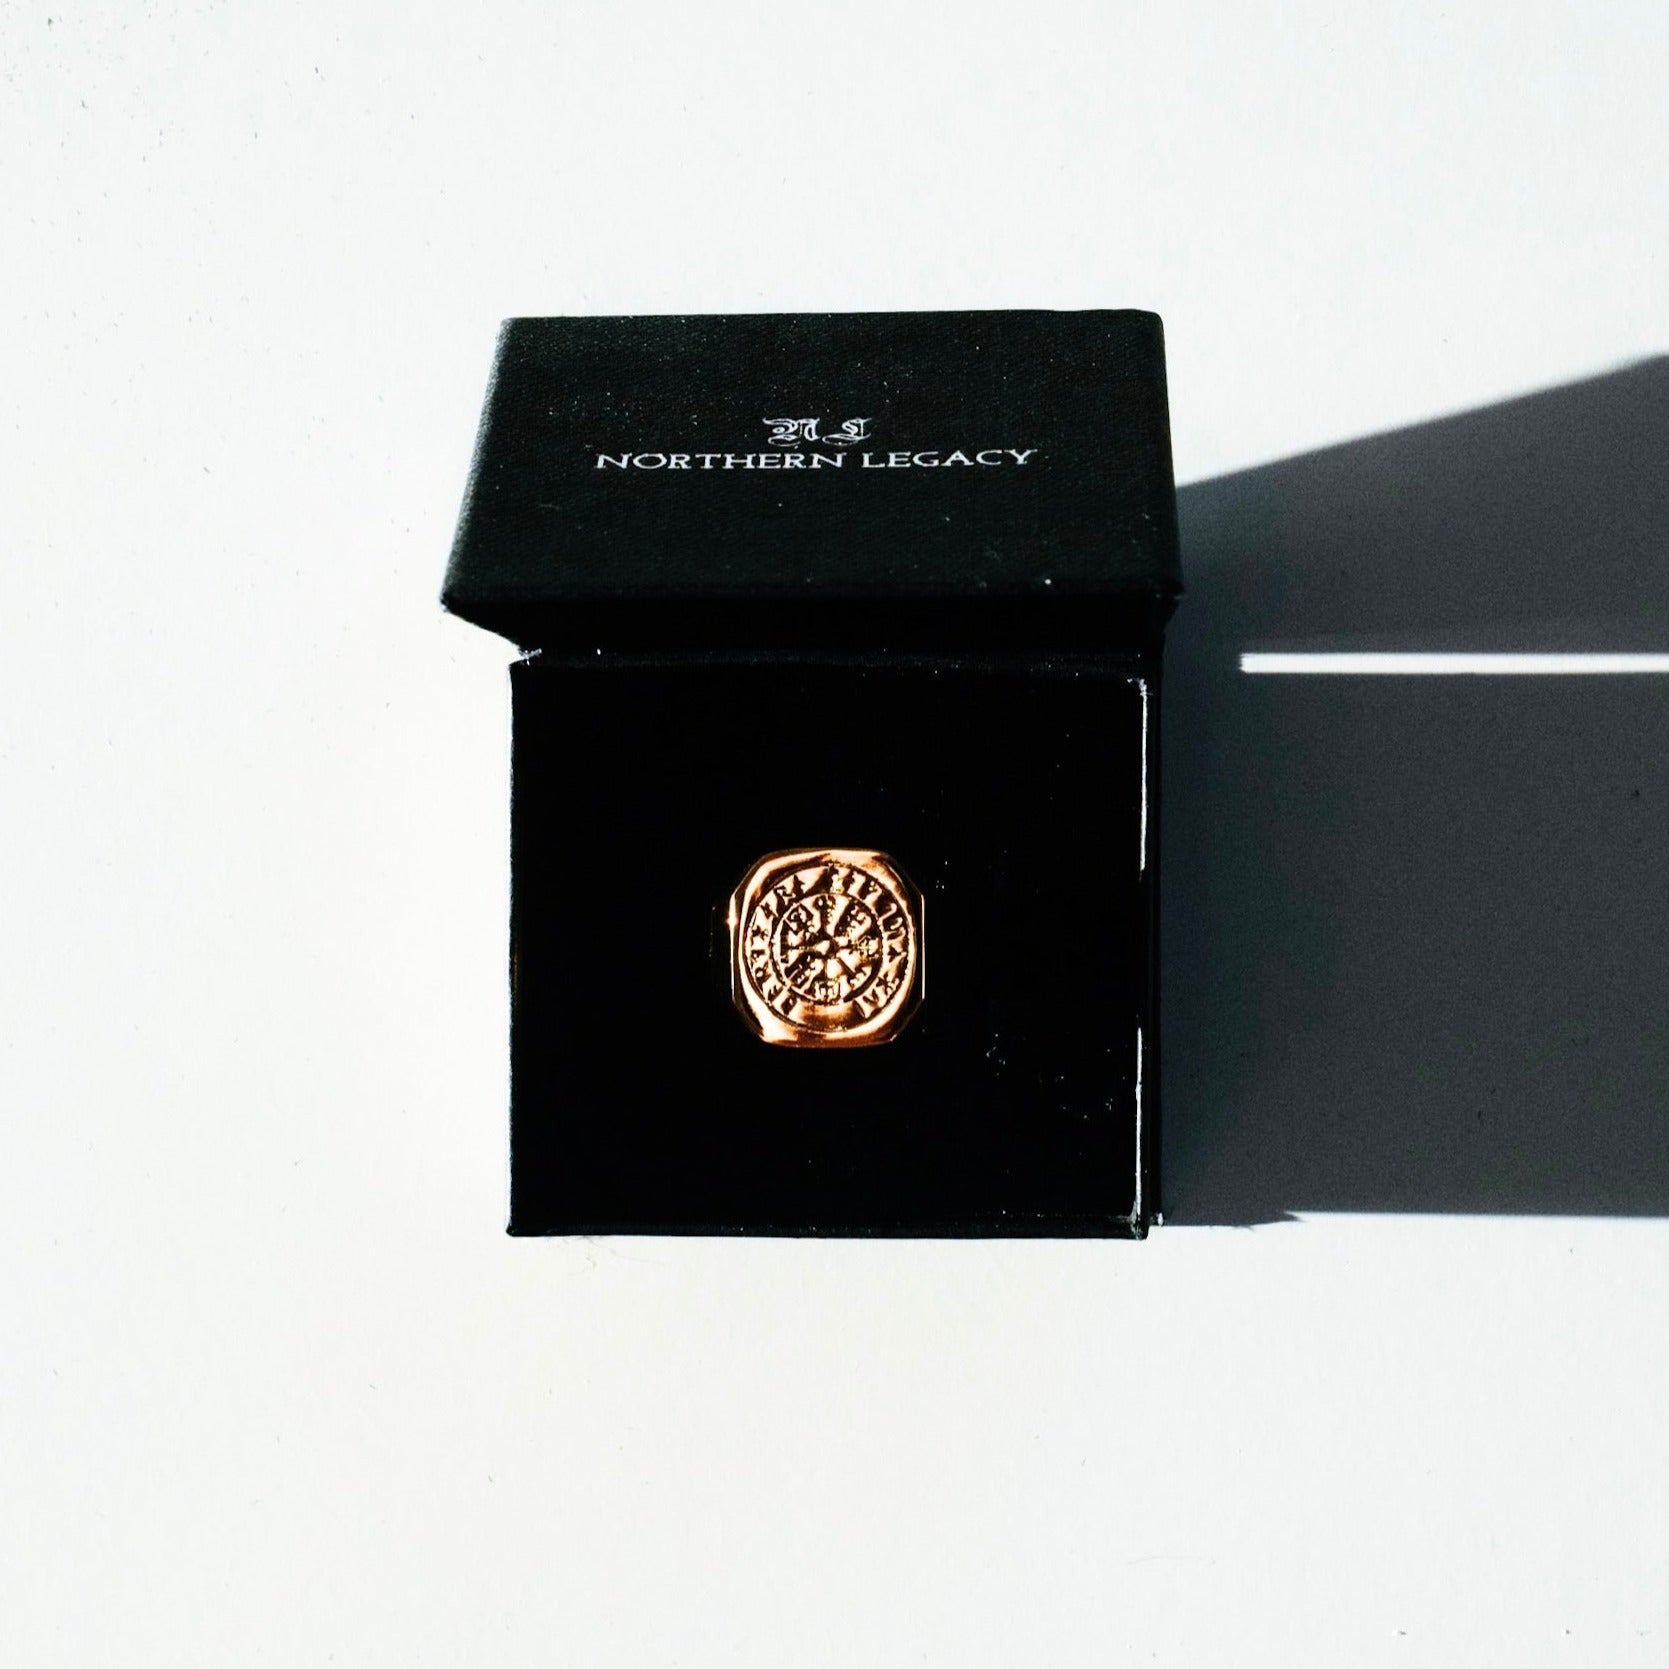 Vegvisir Oversize Signature - Gold-toned ring